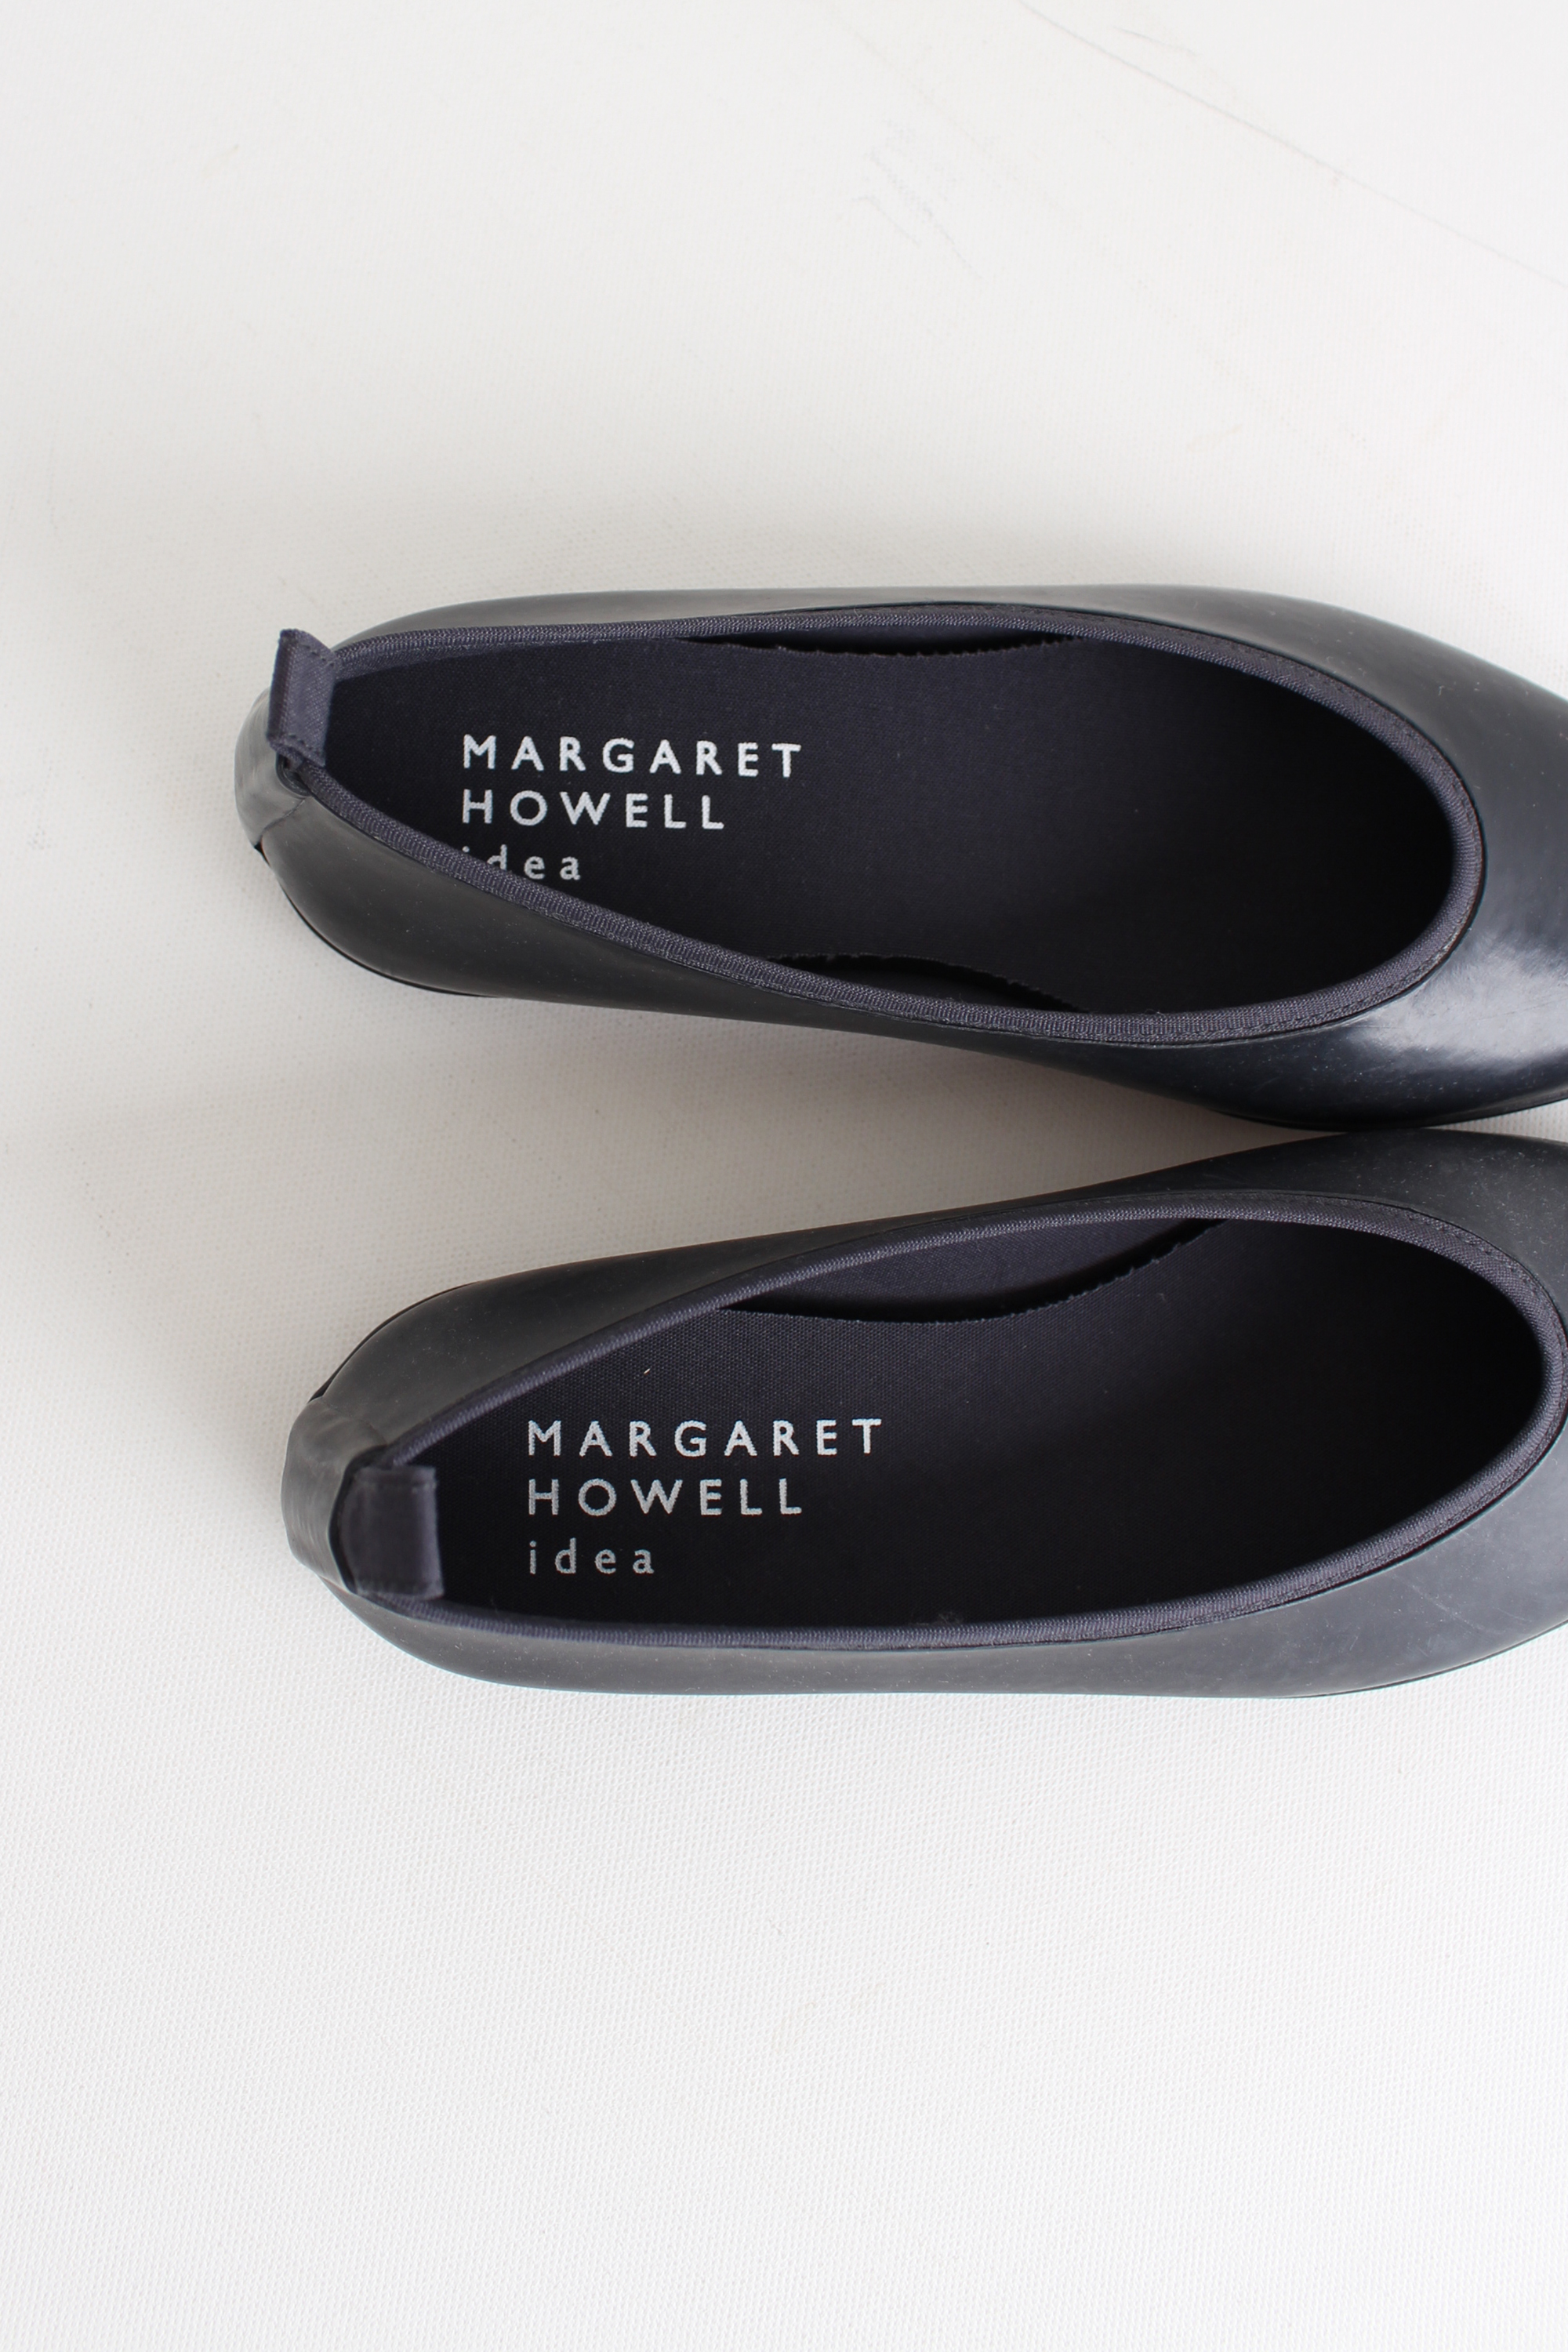 margaret howell idea rain shoes